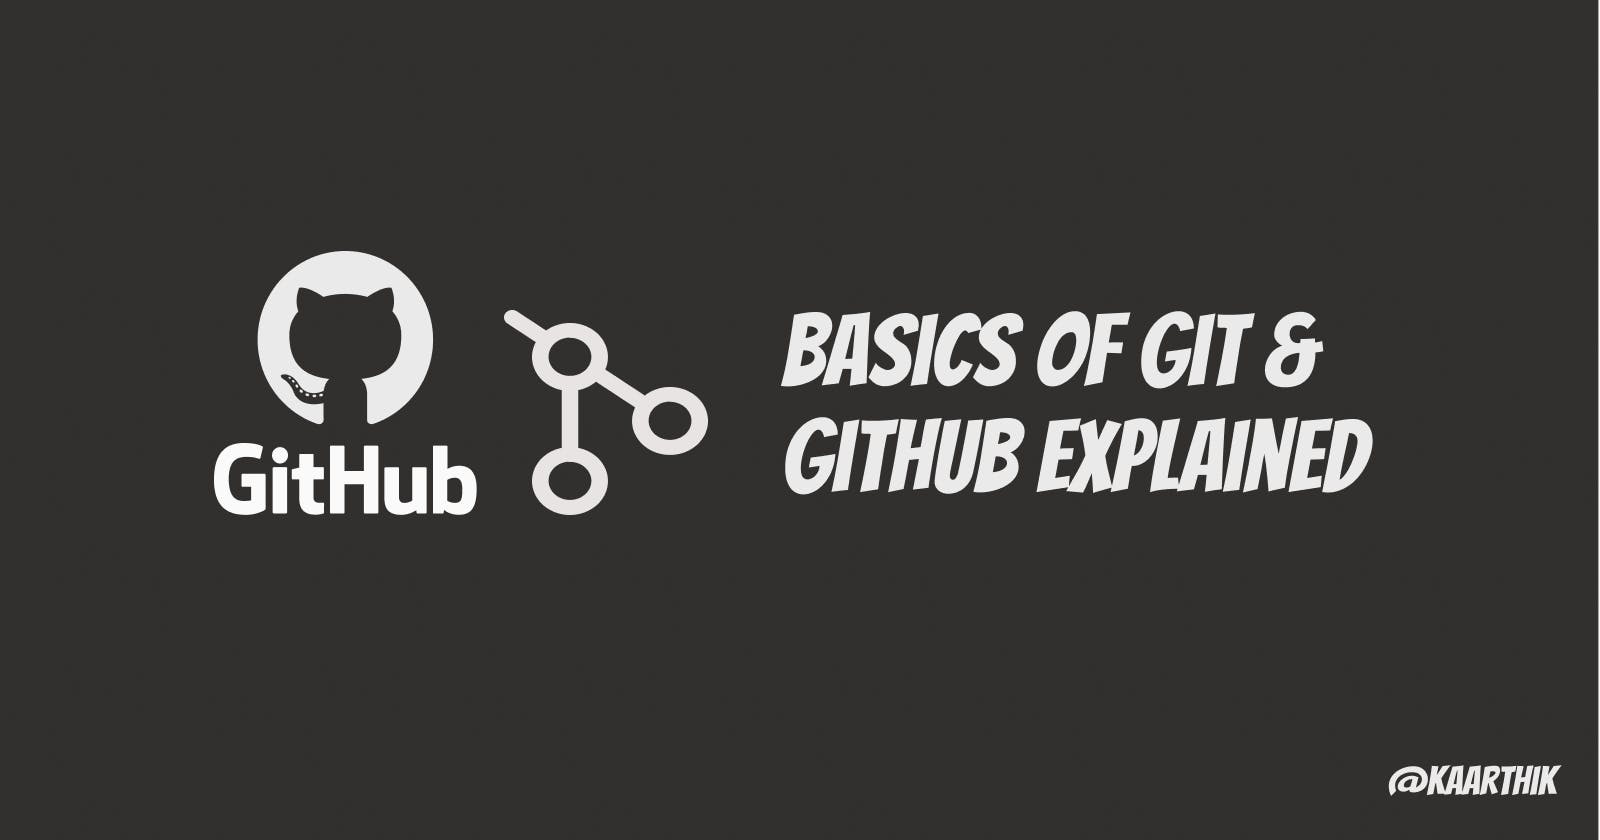 Basics of Github & Git Explained